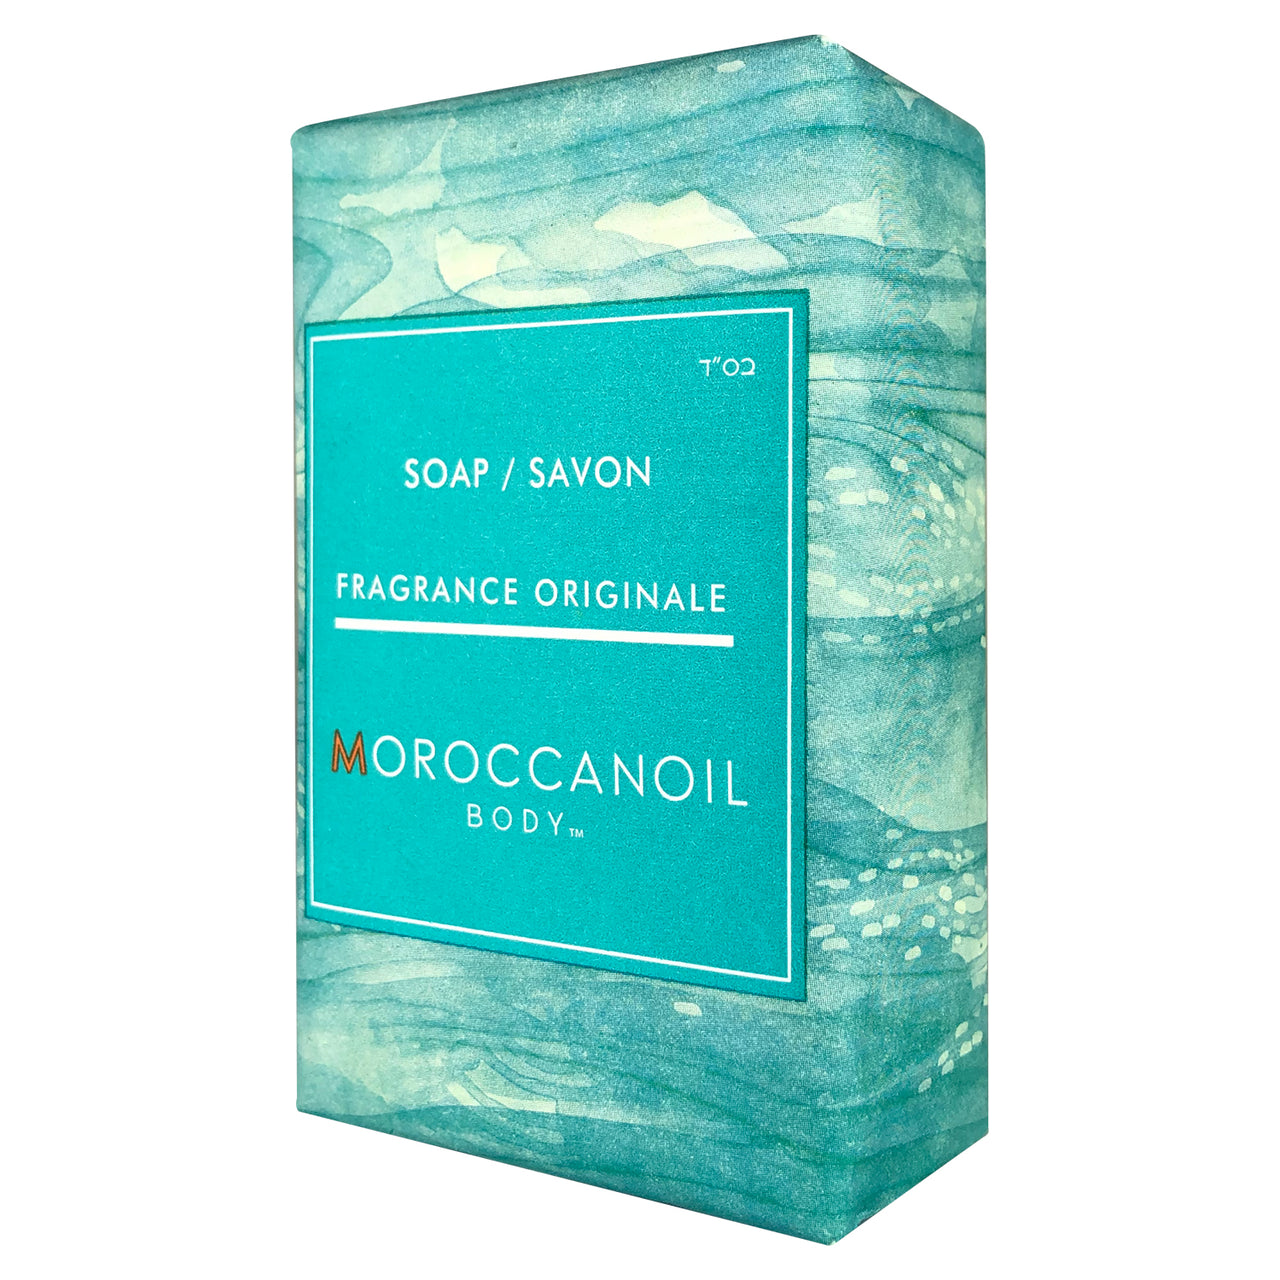 Moroccanoil Body Soap Fragrance Originale 7 oz